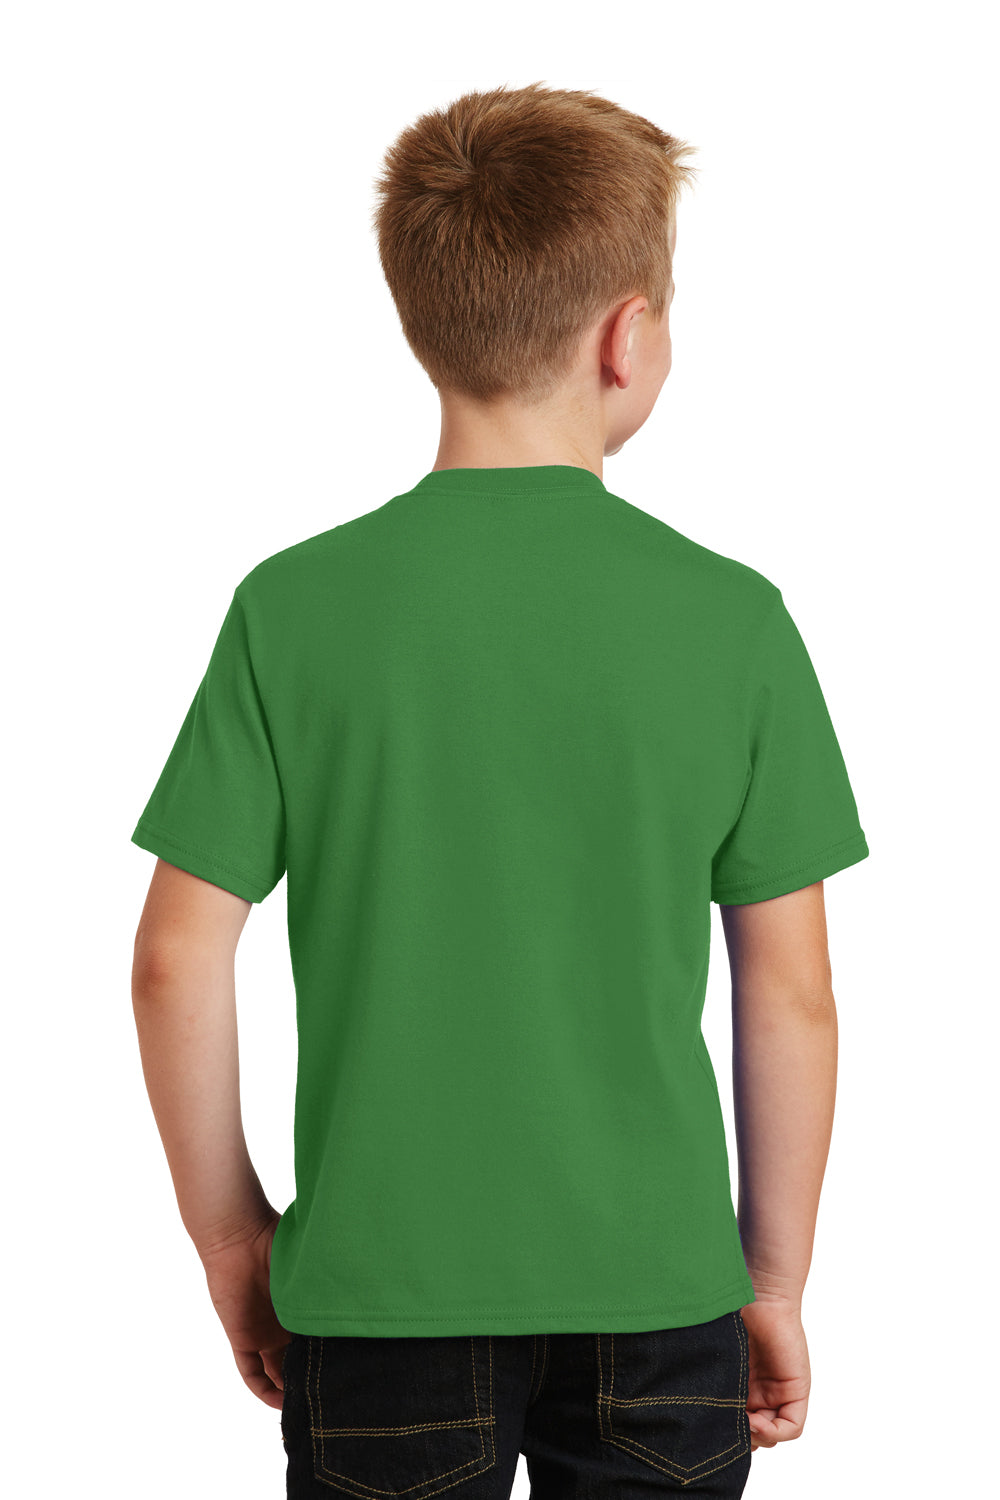 Port & Company PC450Y Youth Fan Favorite Short Sleeve Crewneck T-Shirt Kiwi Green Back